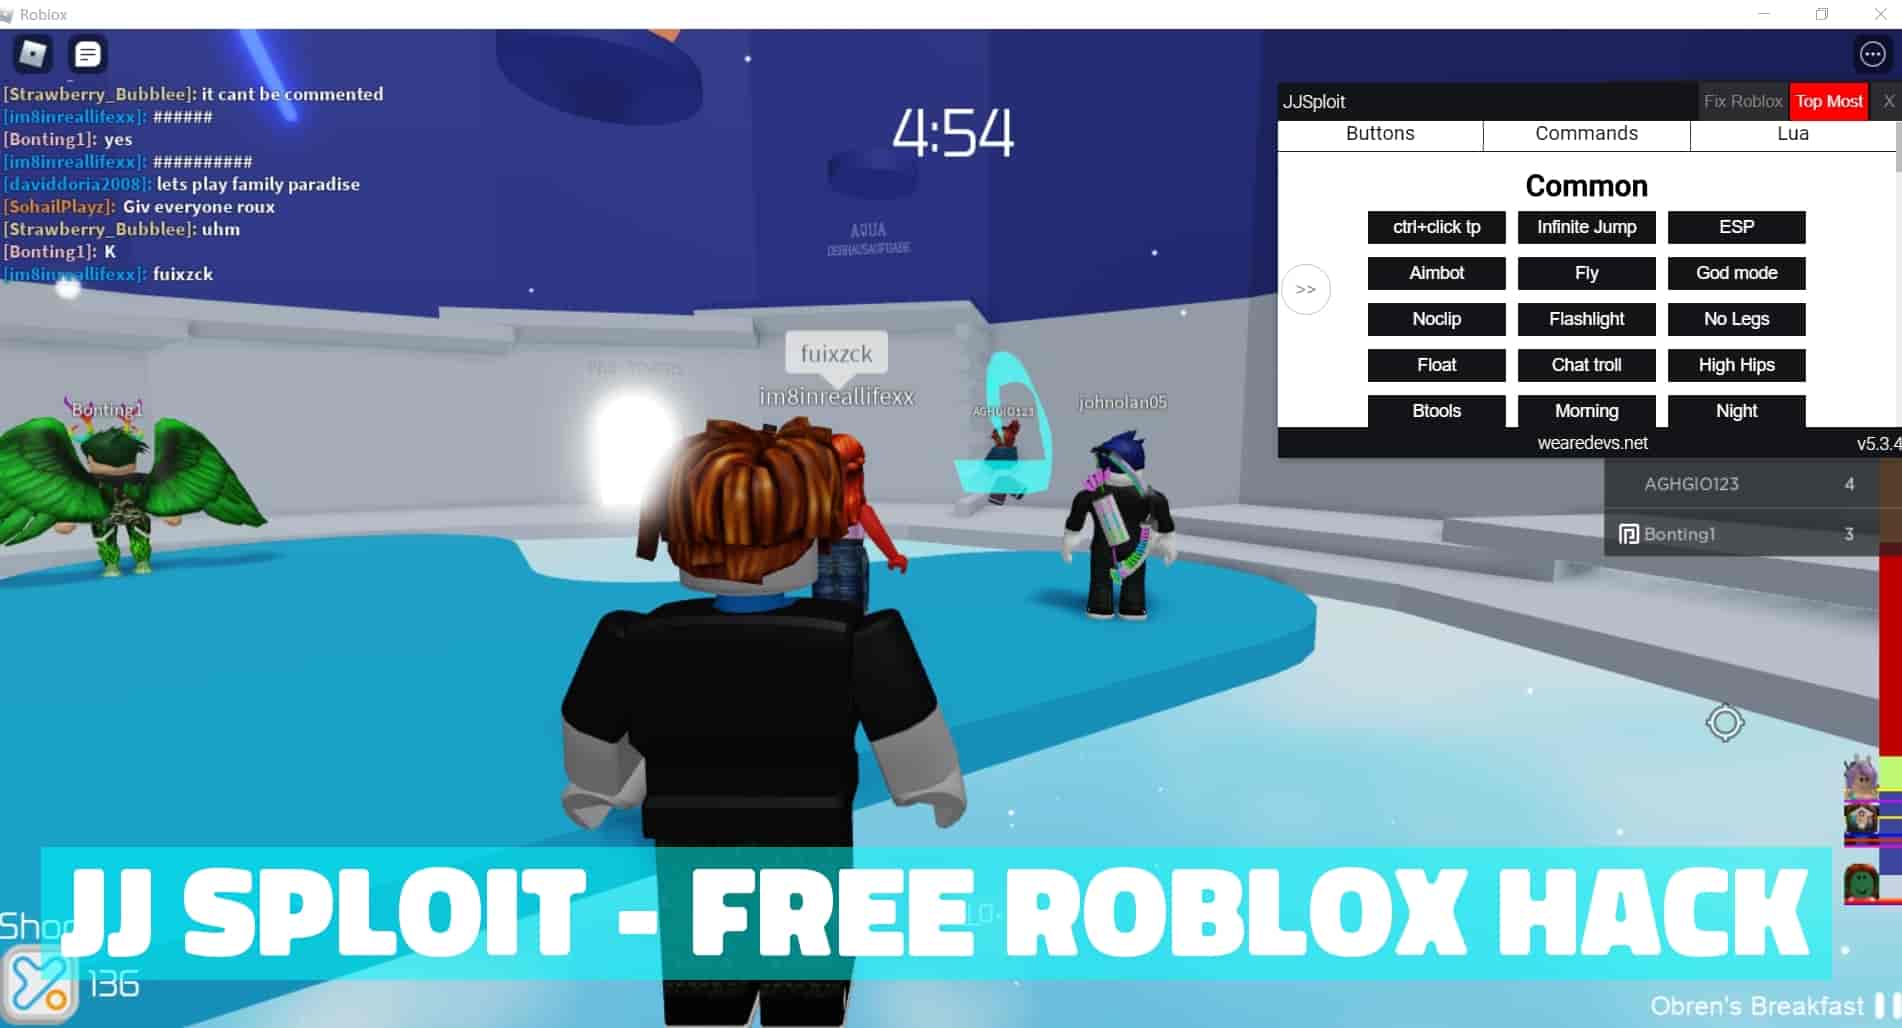 [Latest] JJSploit - Roblox Free Hacks, Working Exploit for Roblox